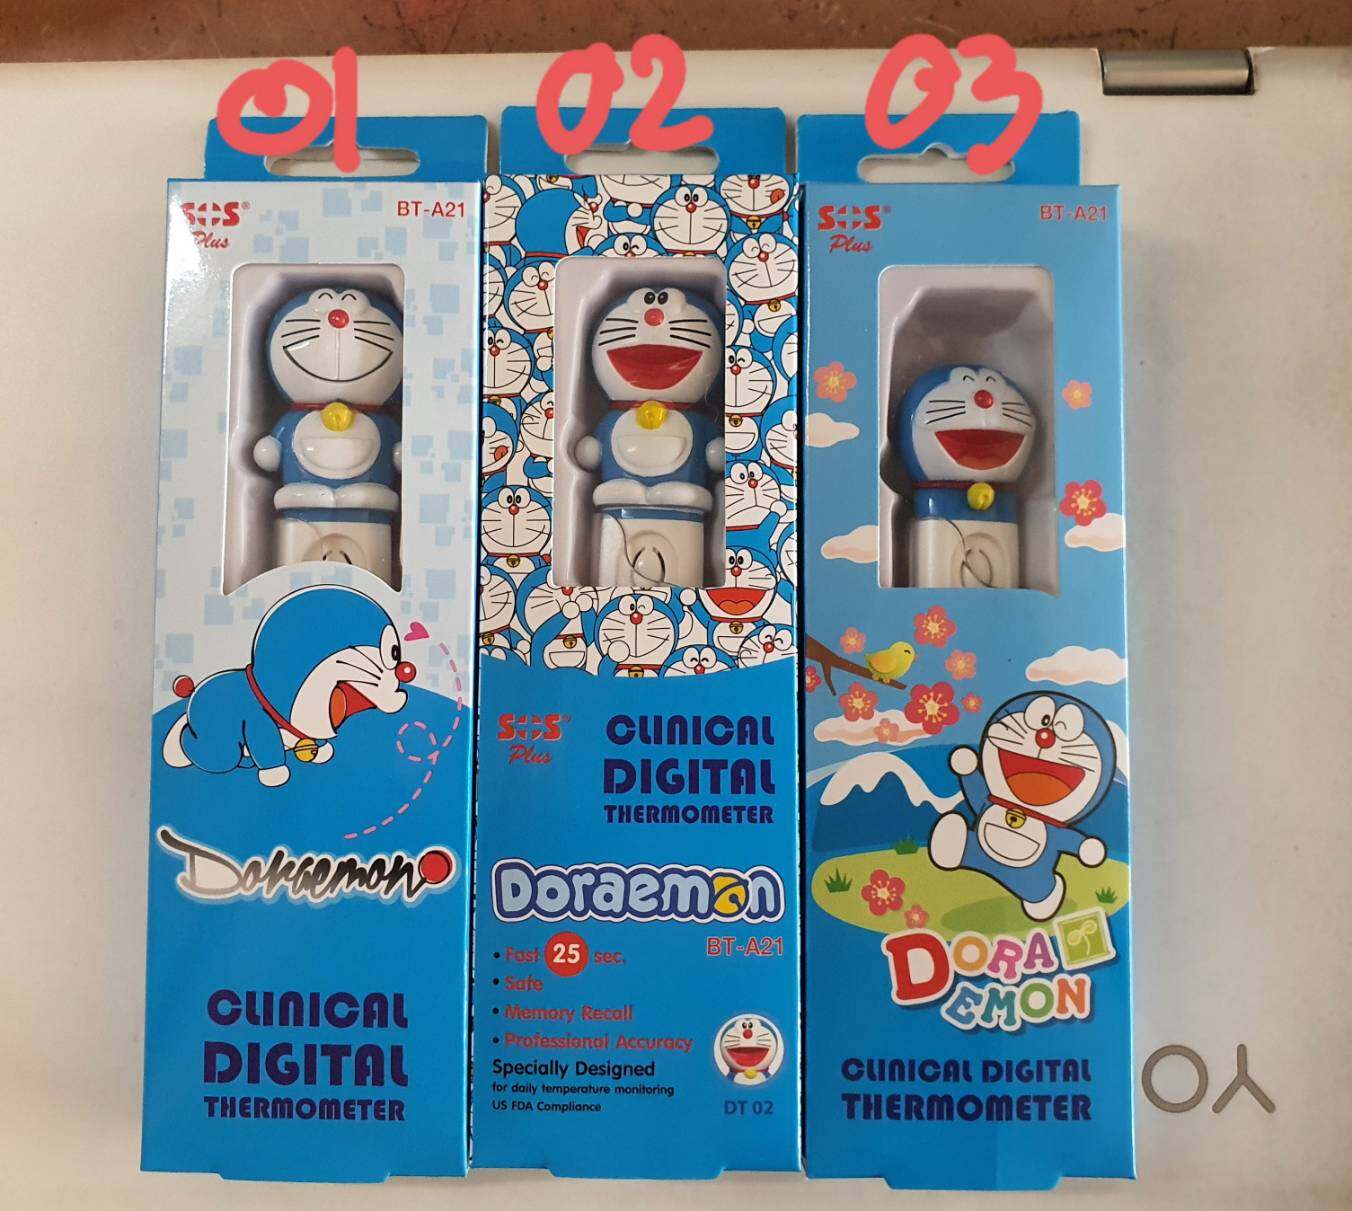 SOS Plus Clinical Digital Thermometer BT-A21 Doraemon ปรอทวัดไข้เอสโอเอส พลัส โดเรม่อน